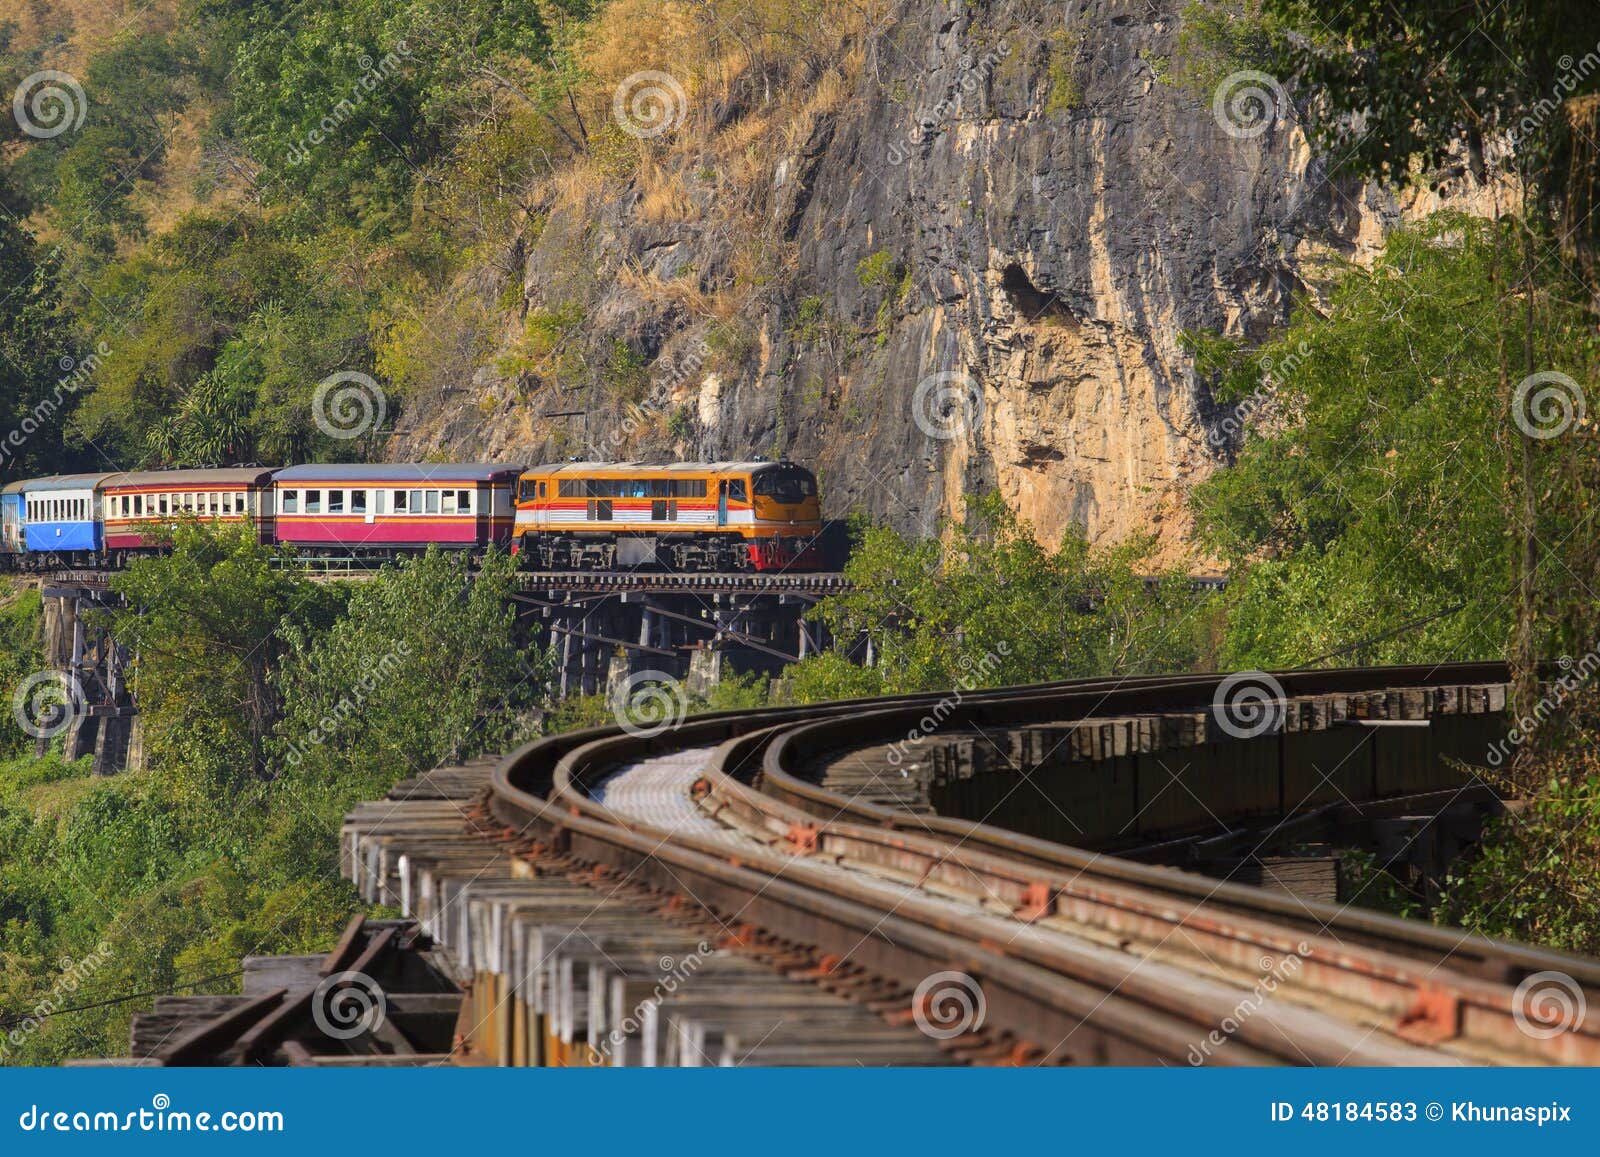 thai trains running on death railways crossing kwai river in kan